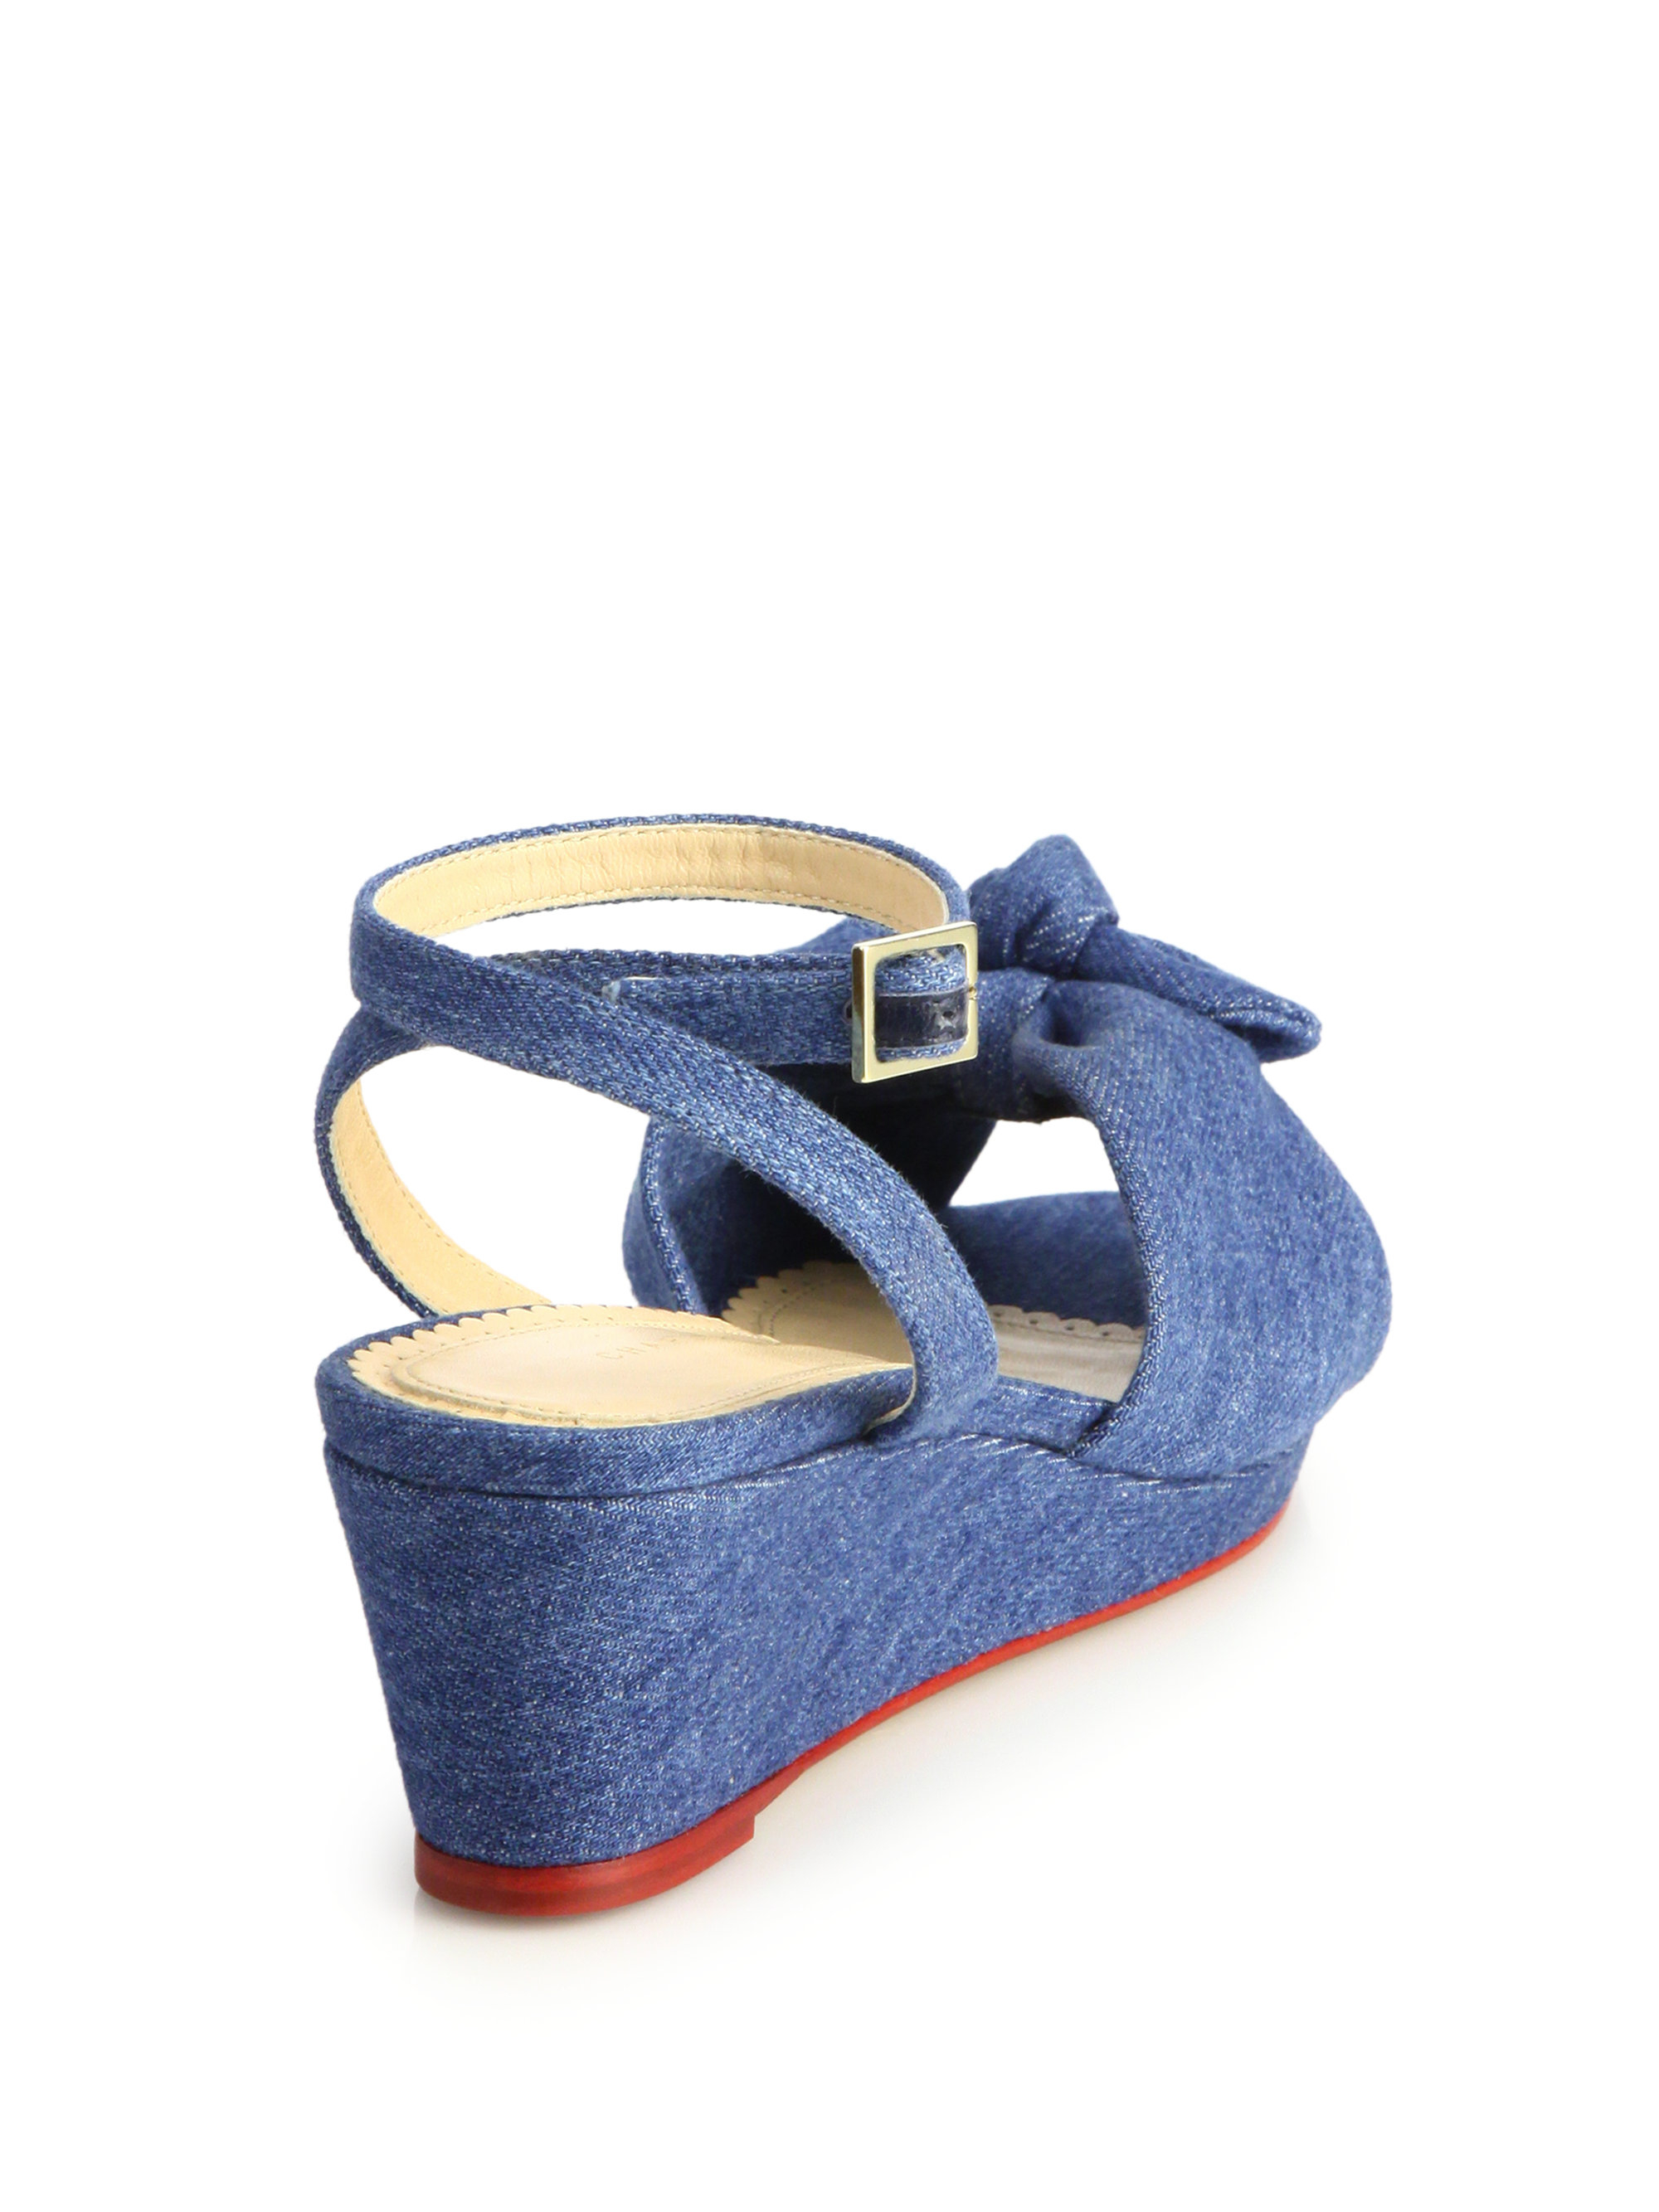 Lyst - Charlotte Olympia Alexa Denim Wedge Sandals in Blue